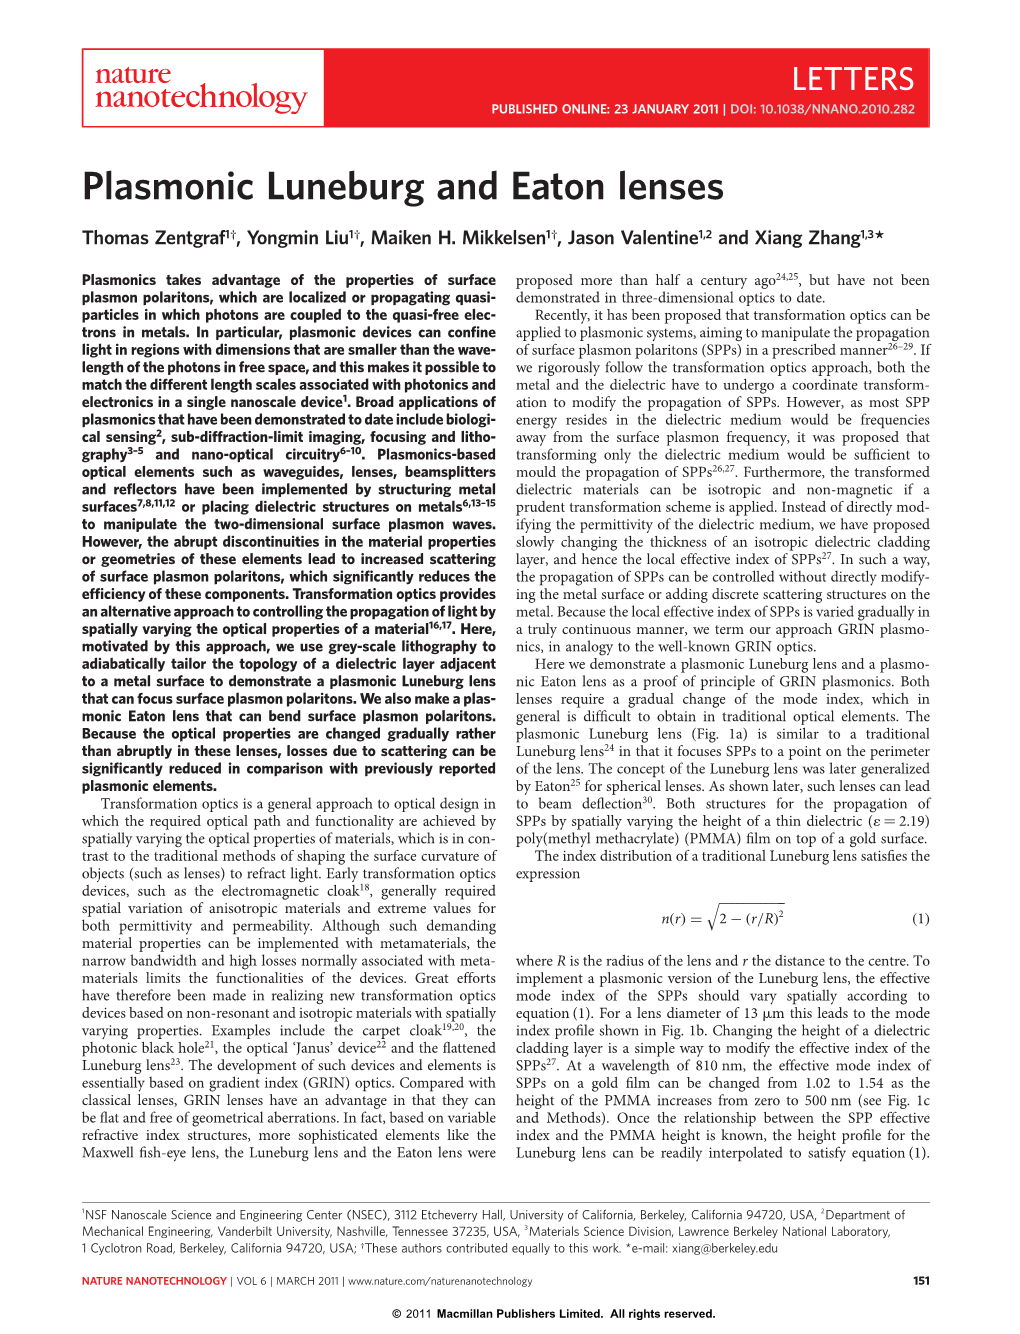 Plasmonic Luneburg and Eaton Lenses Thomas Zentgraf1†, Yongmin Liu1†,Maikenh.Mikkelsen1†,Jasonvalentine1,2 and Xiang Zhang1,3*